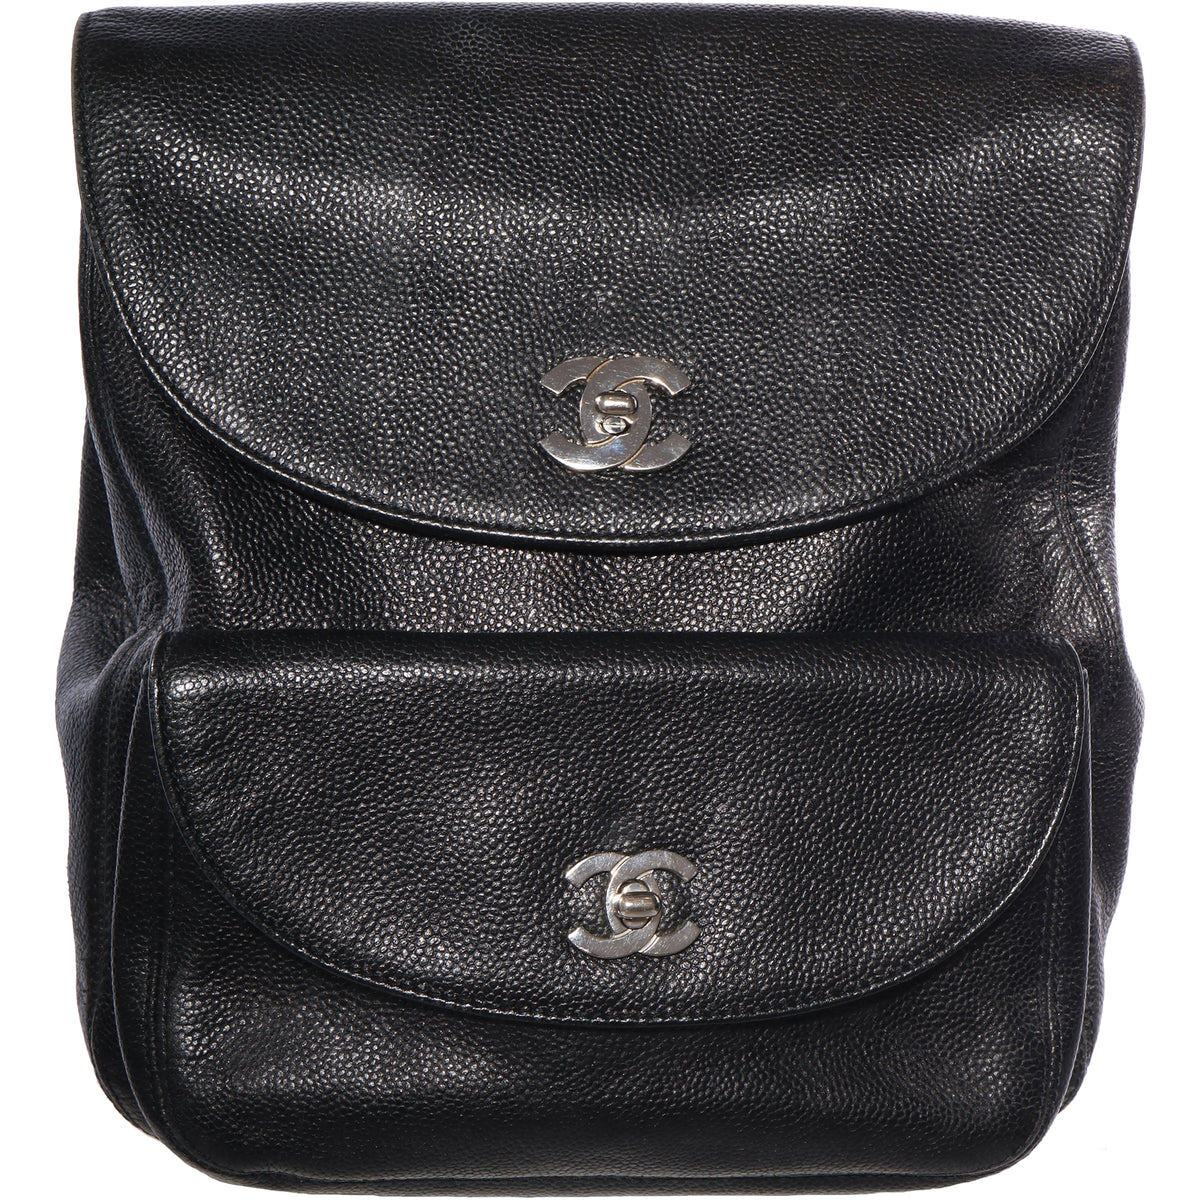 Vintage Chanel Caviar Two Compartment Backpack Handbag